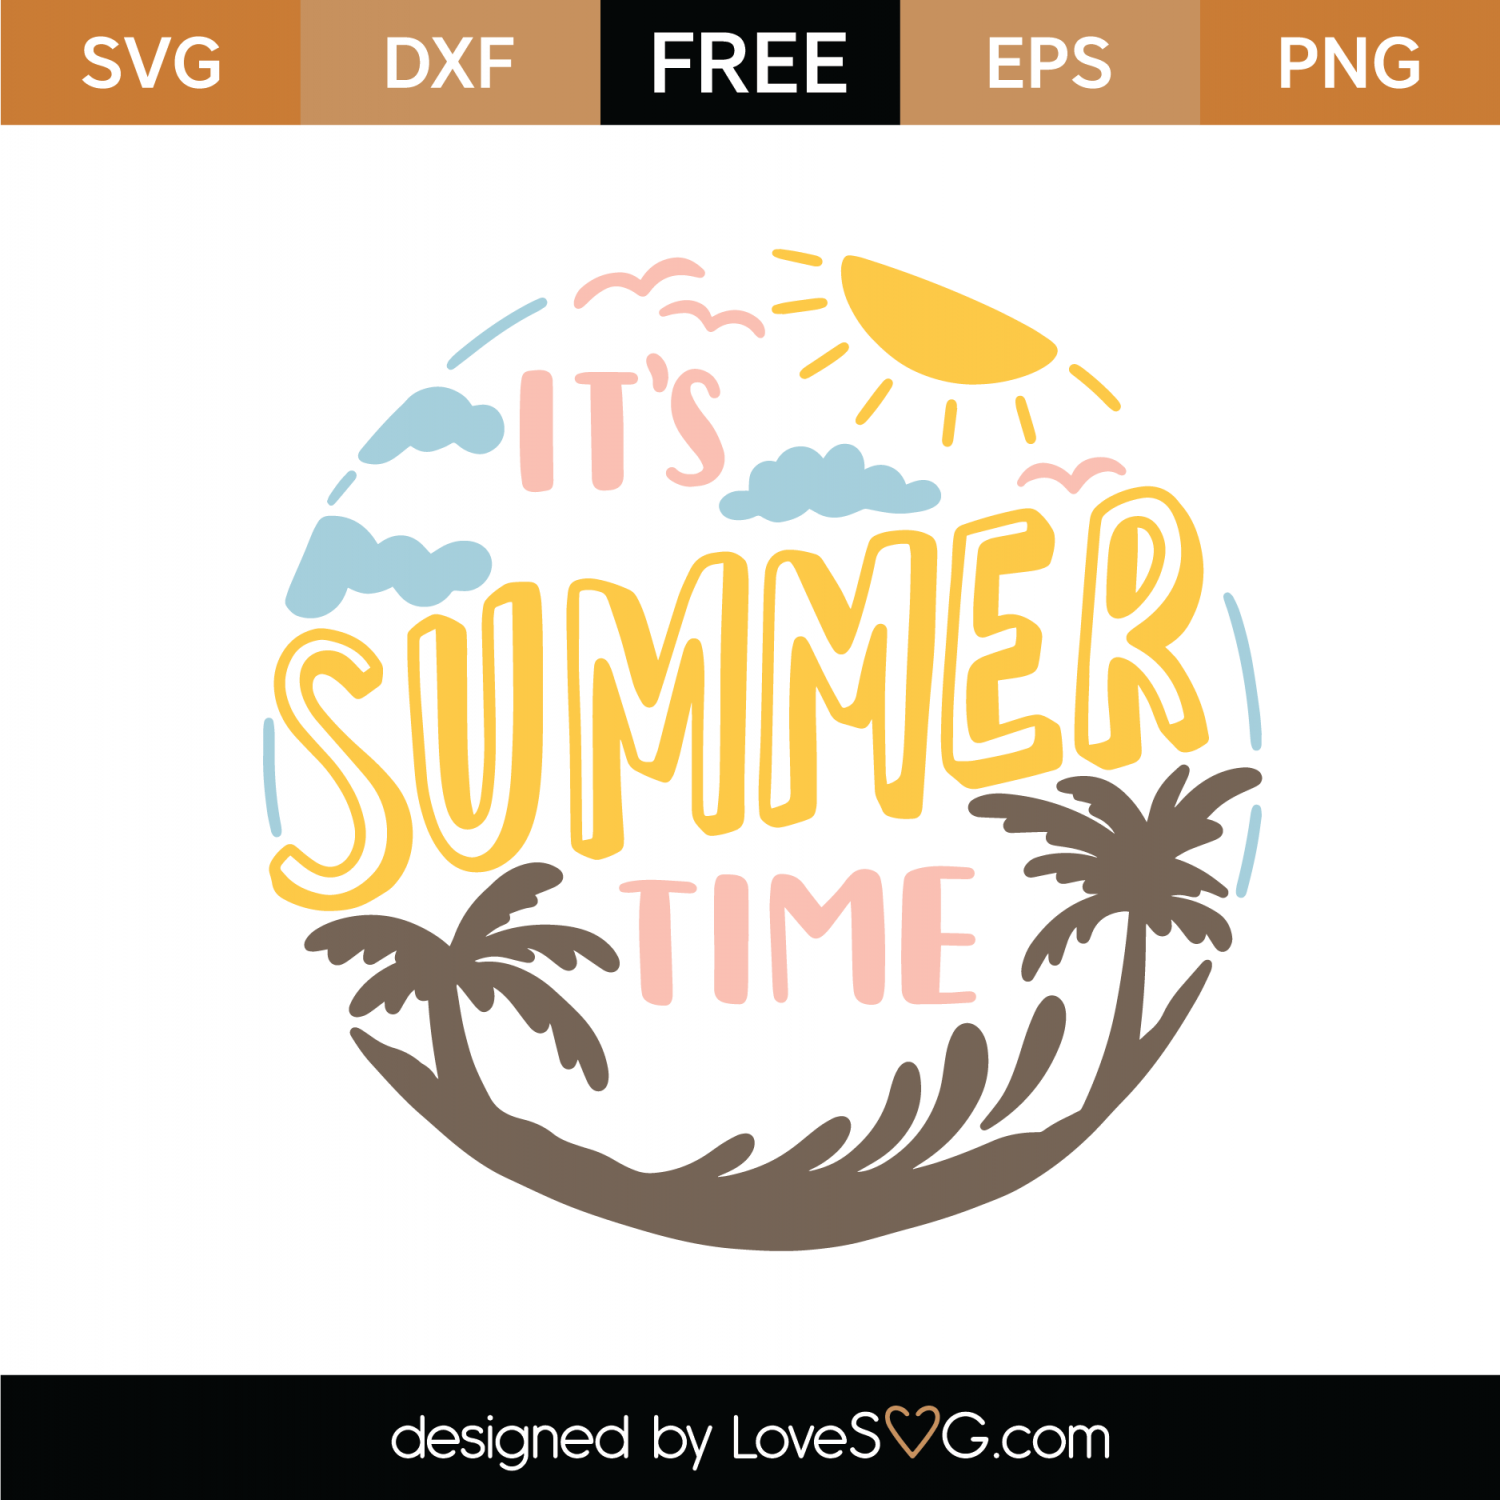 Download Free It's Summer Time SVG Cut File | Lovesvg.com